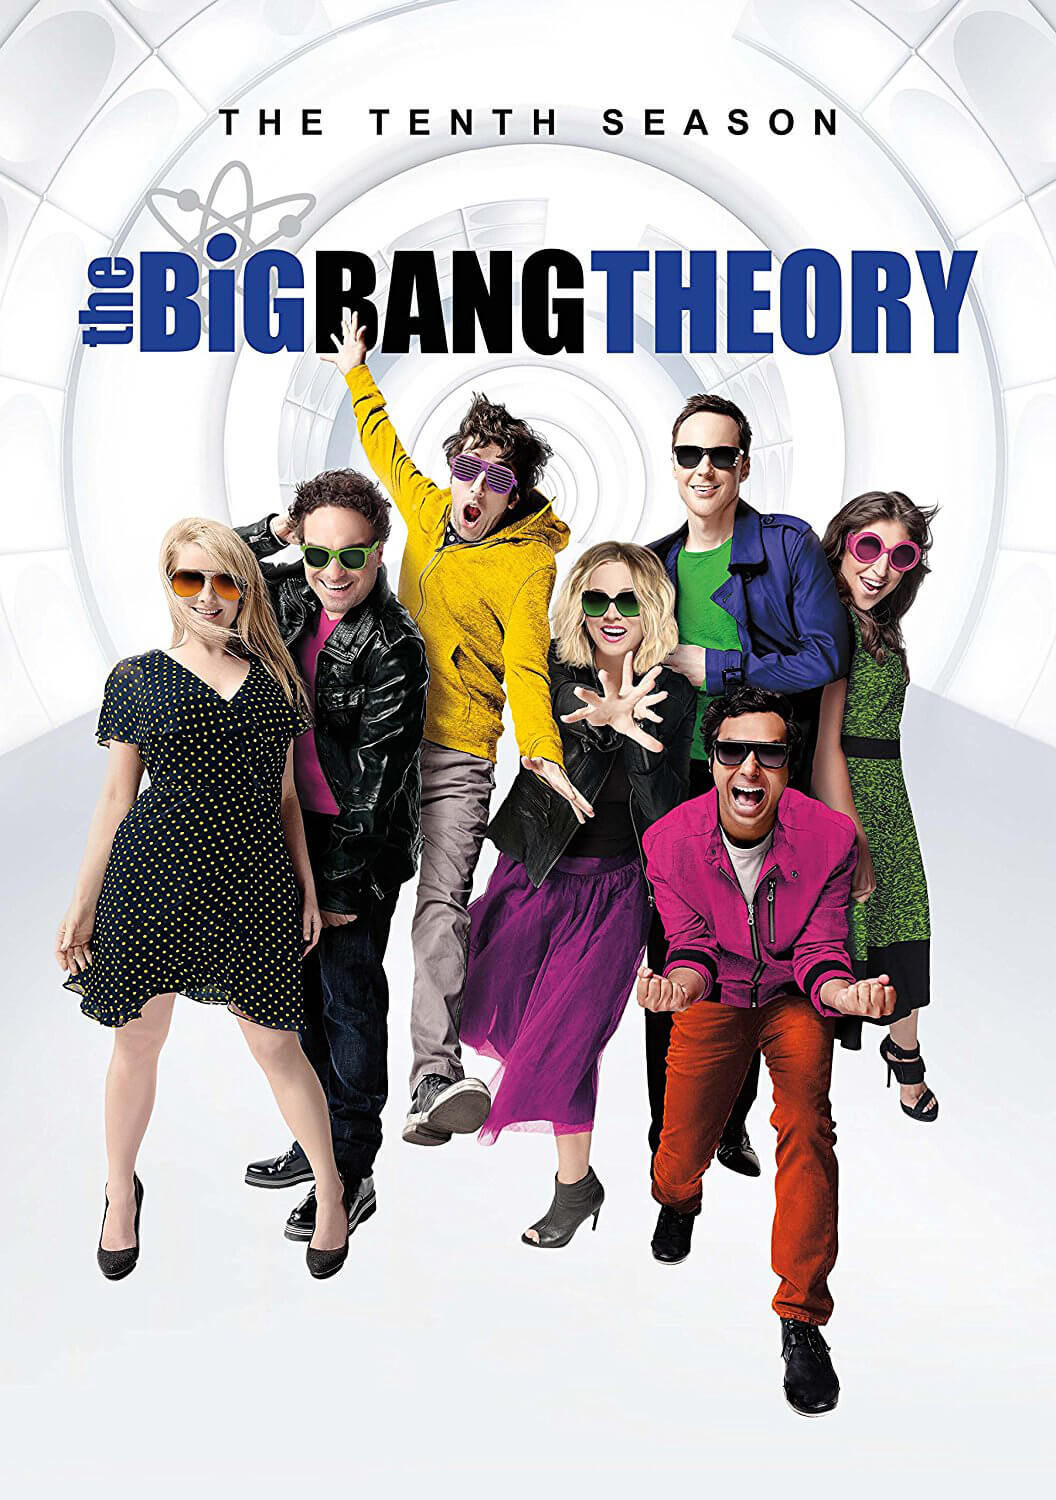 the big bang theory french saison 1 torrent